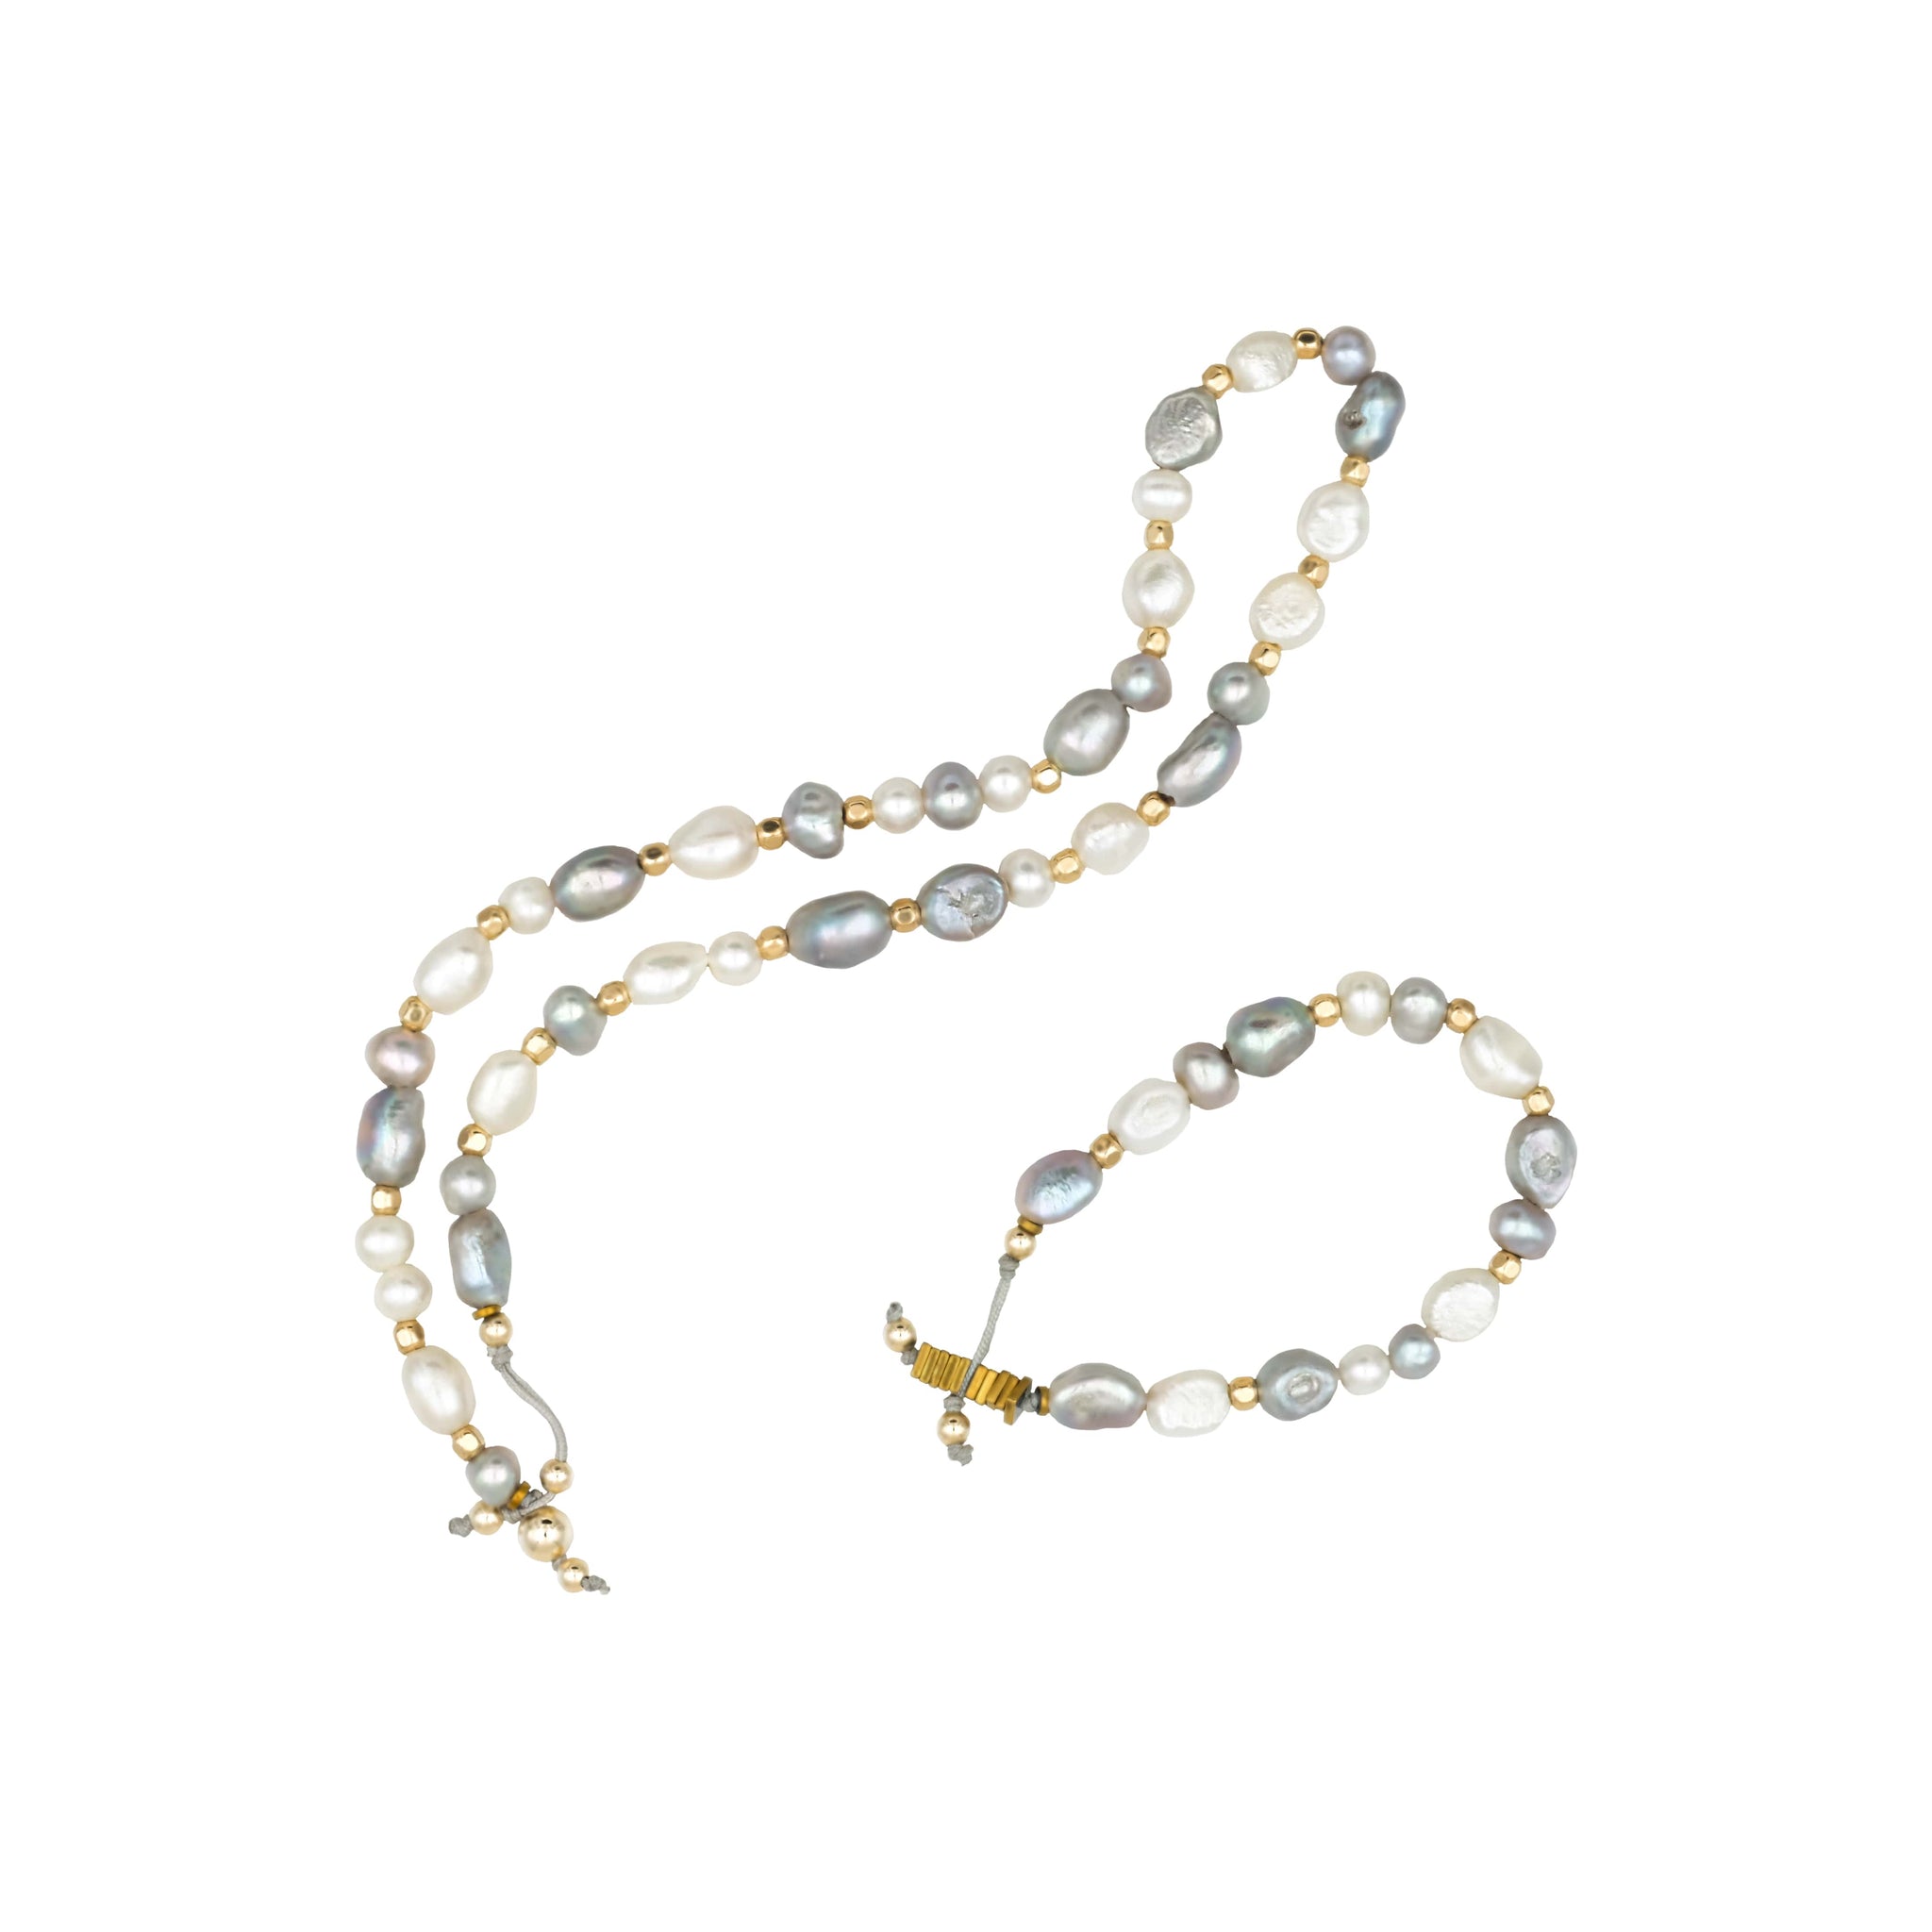 Handcrafted designer stone vibe jewelry gray white pearls bracelet - popvibe